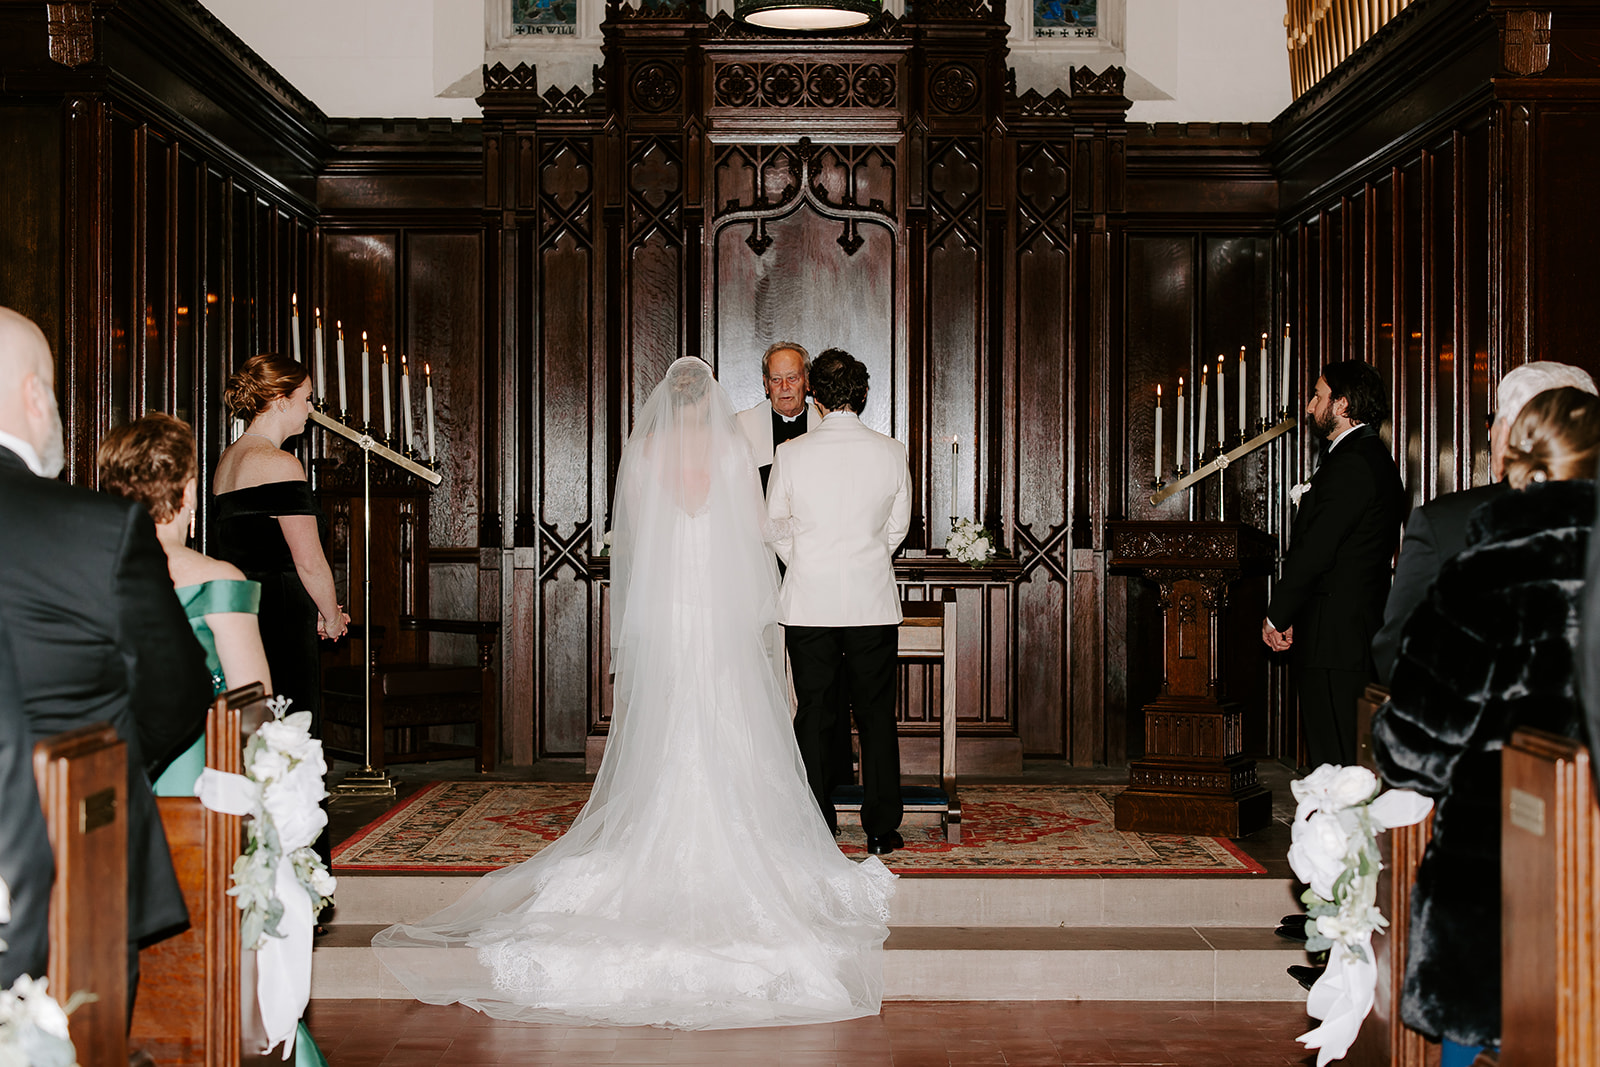 Bride and groom stand together during the stunning Stevens estate wedding ceremony